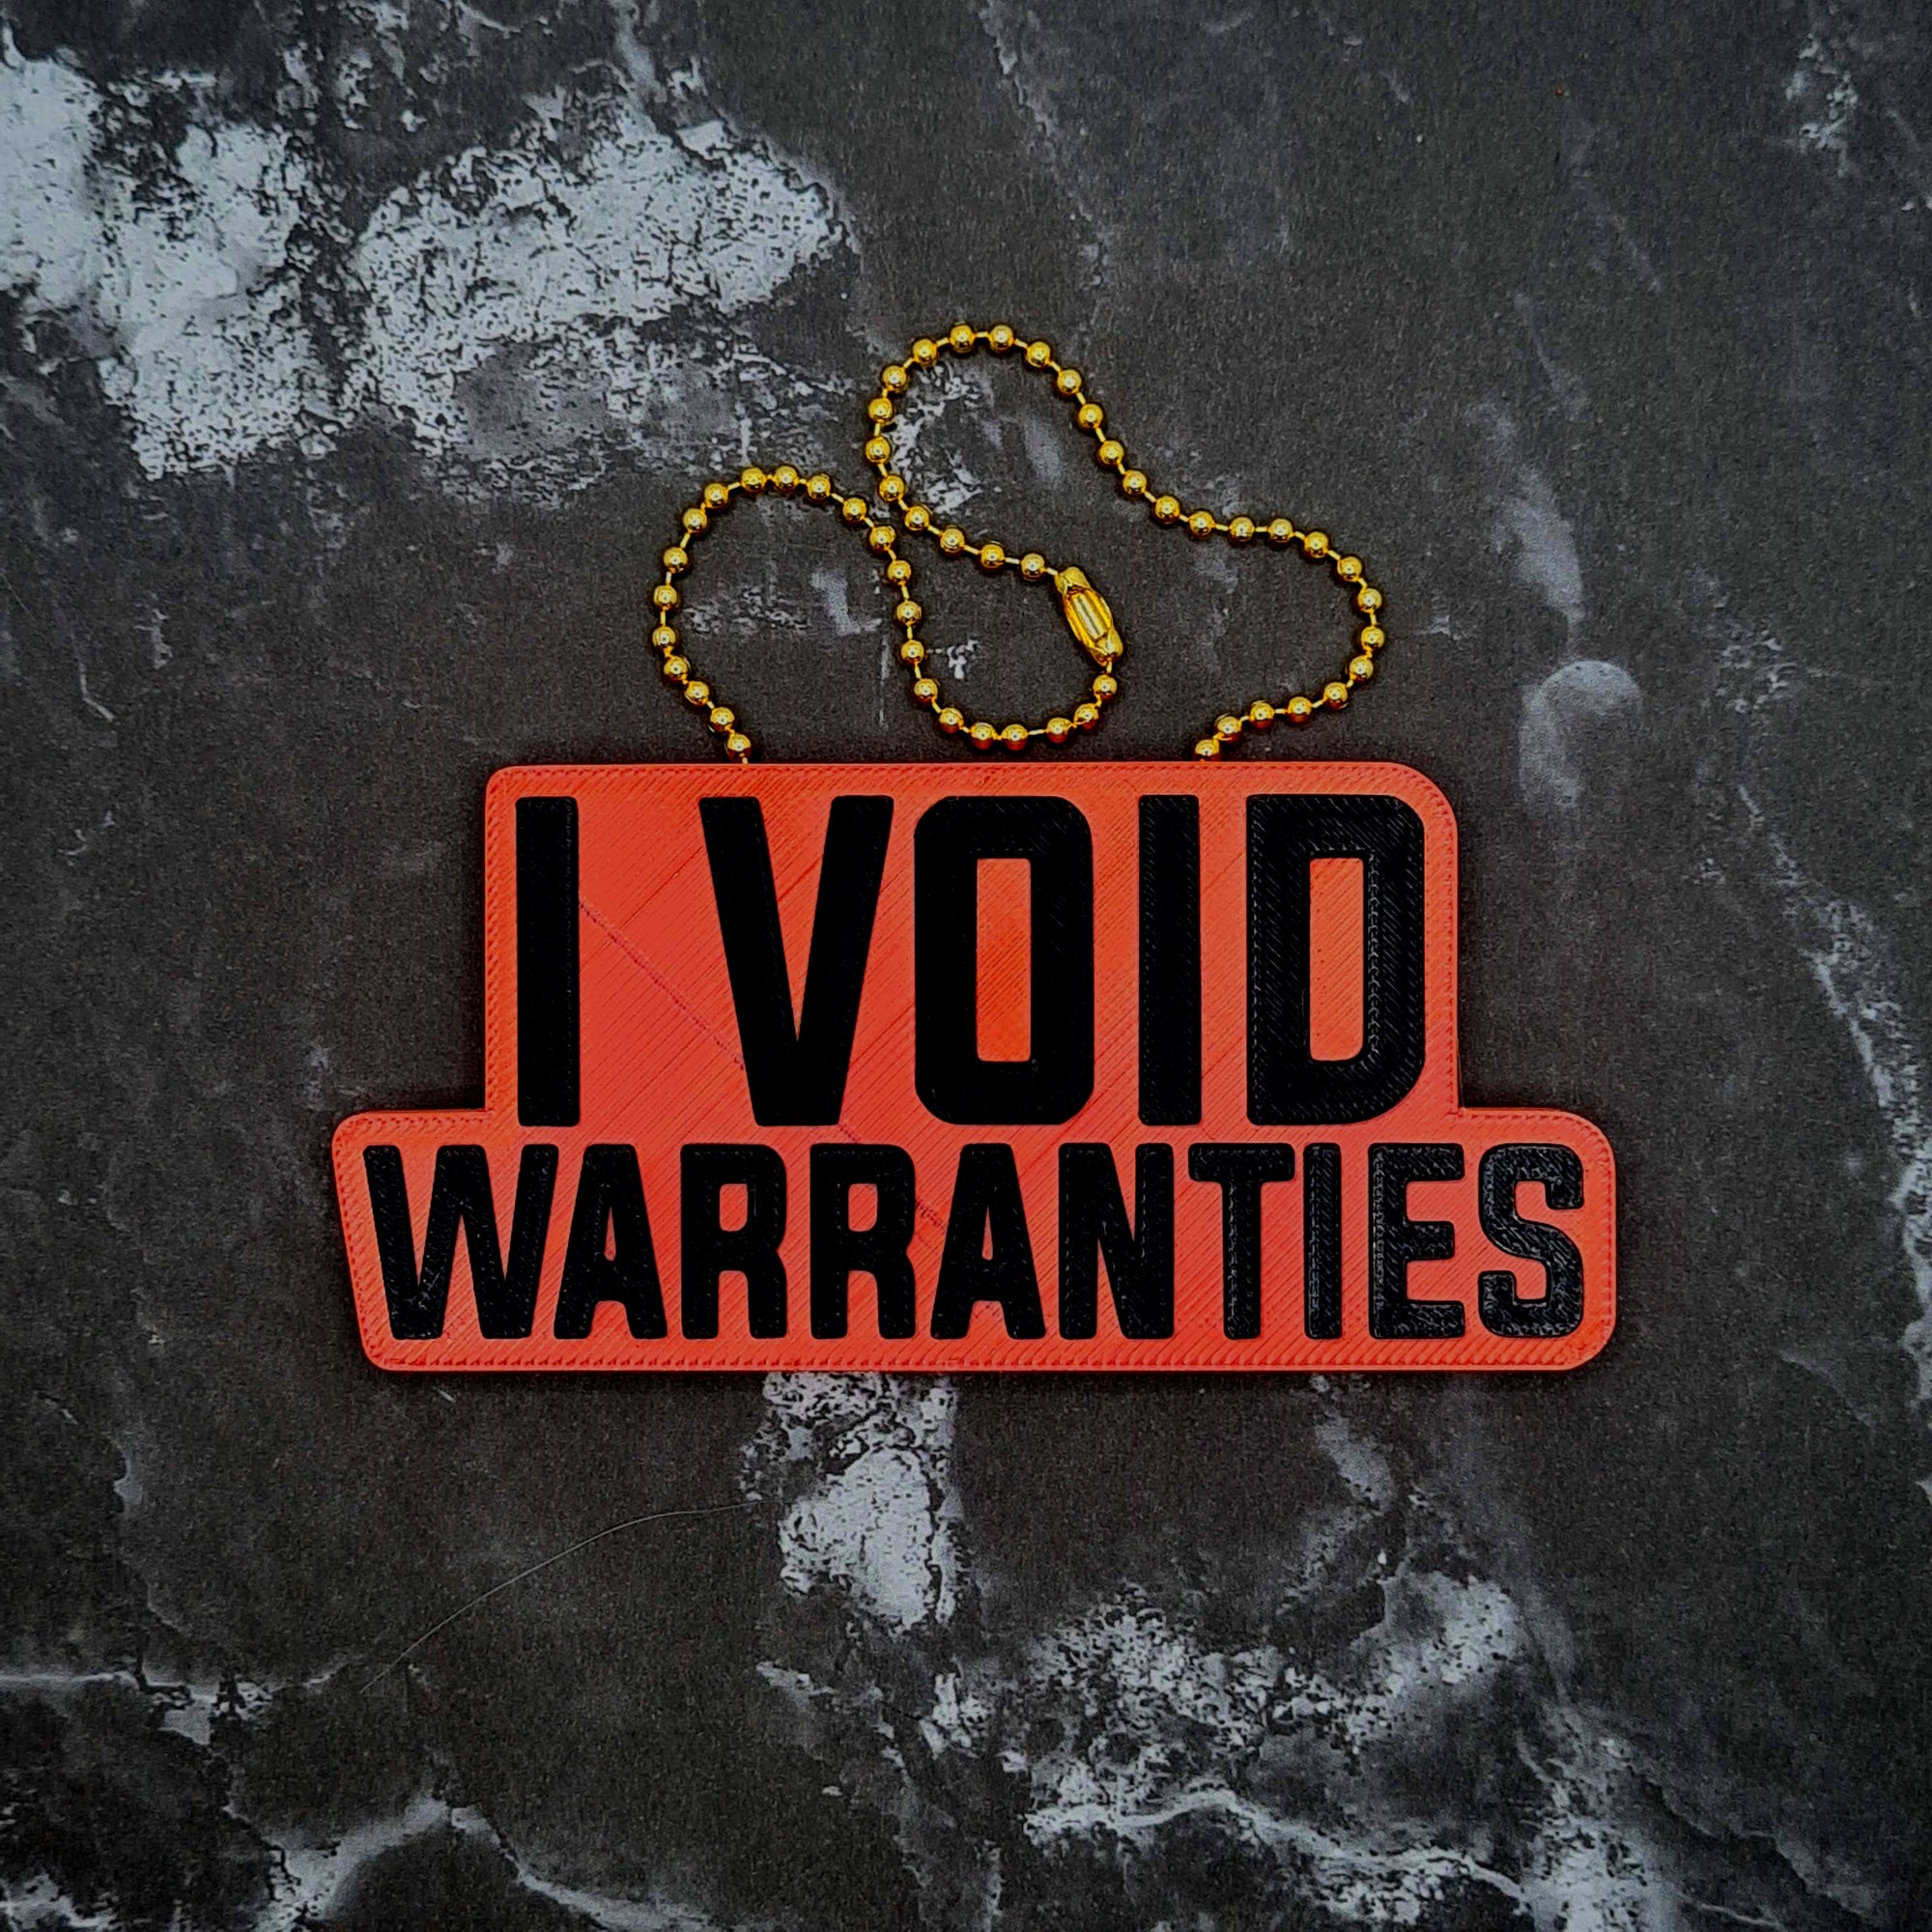 I Void Warranties Charm!